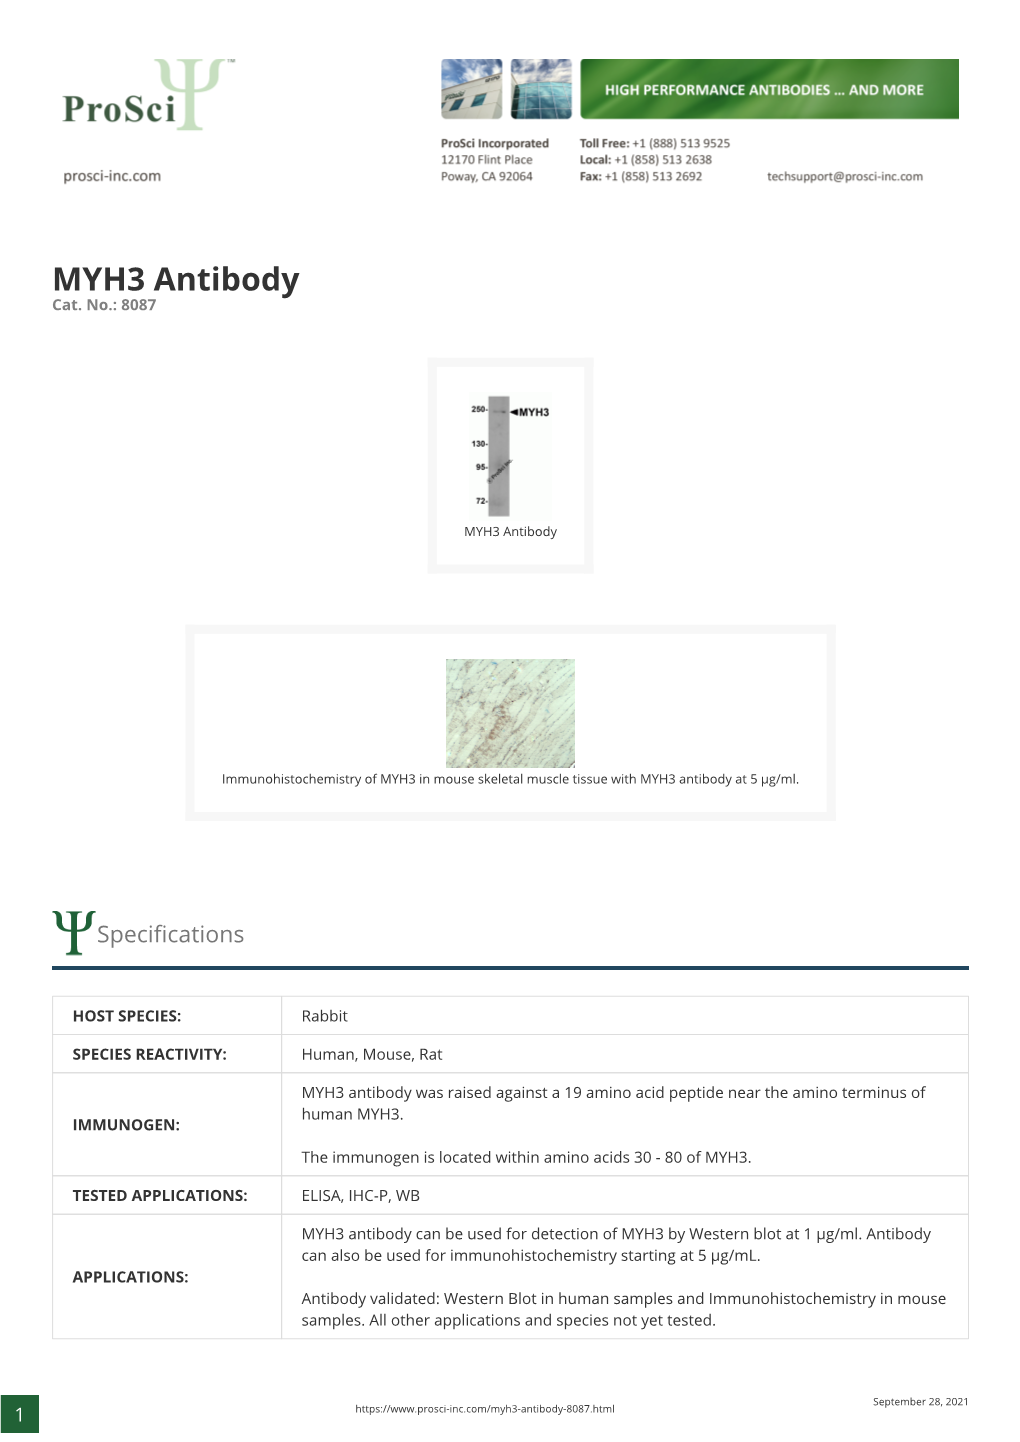 MYH3 Antibody Cat